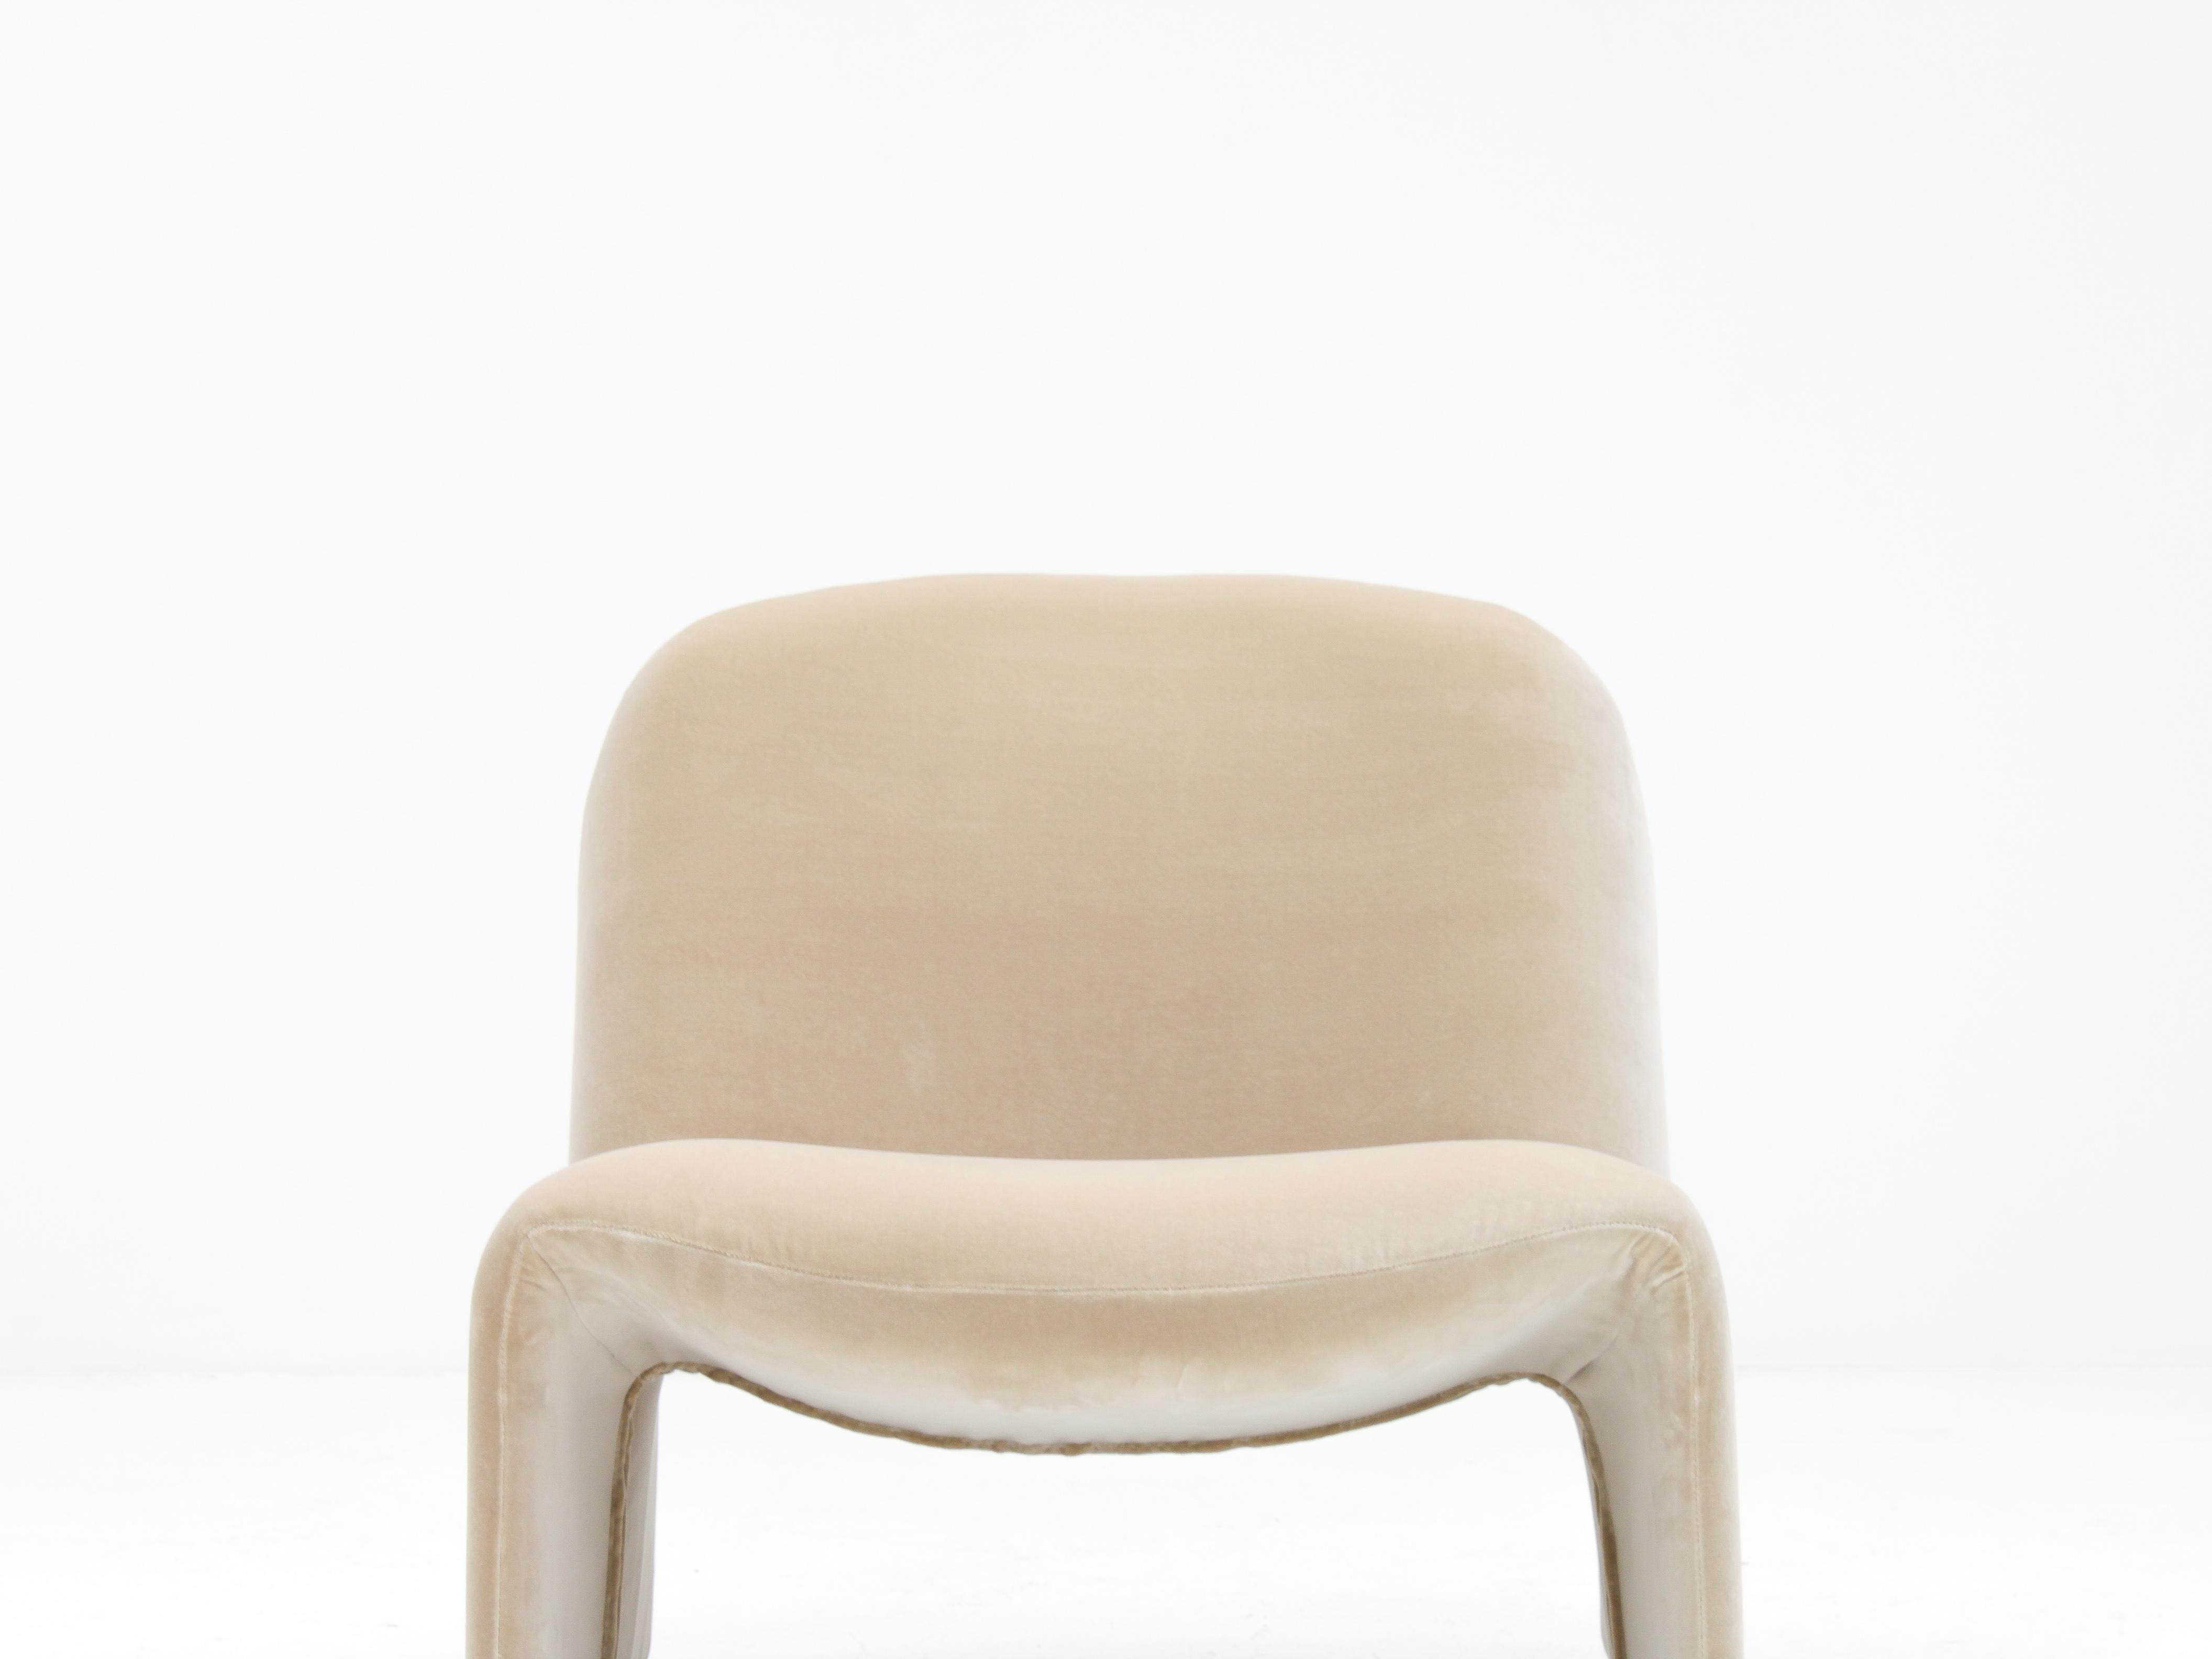 Dutch Giancarlo Piretti “Alky” Chair in New Velvet, Artifort, 1970s, *Customizable*